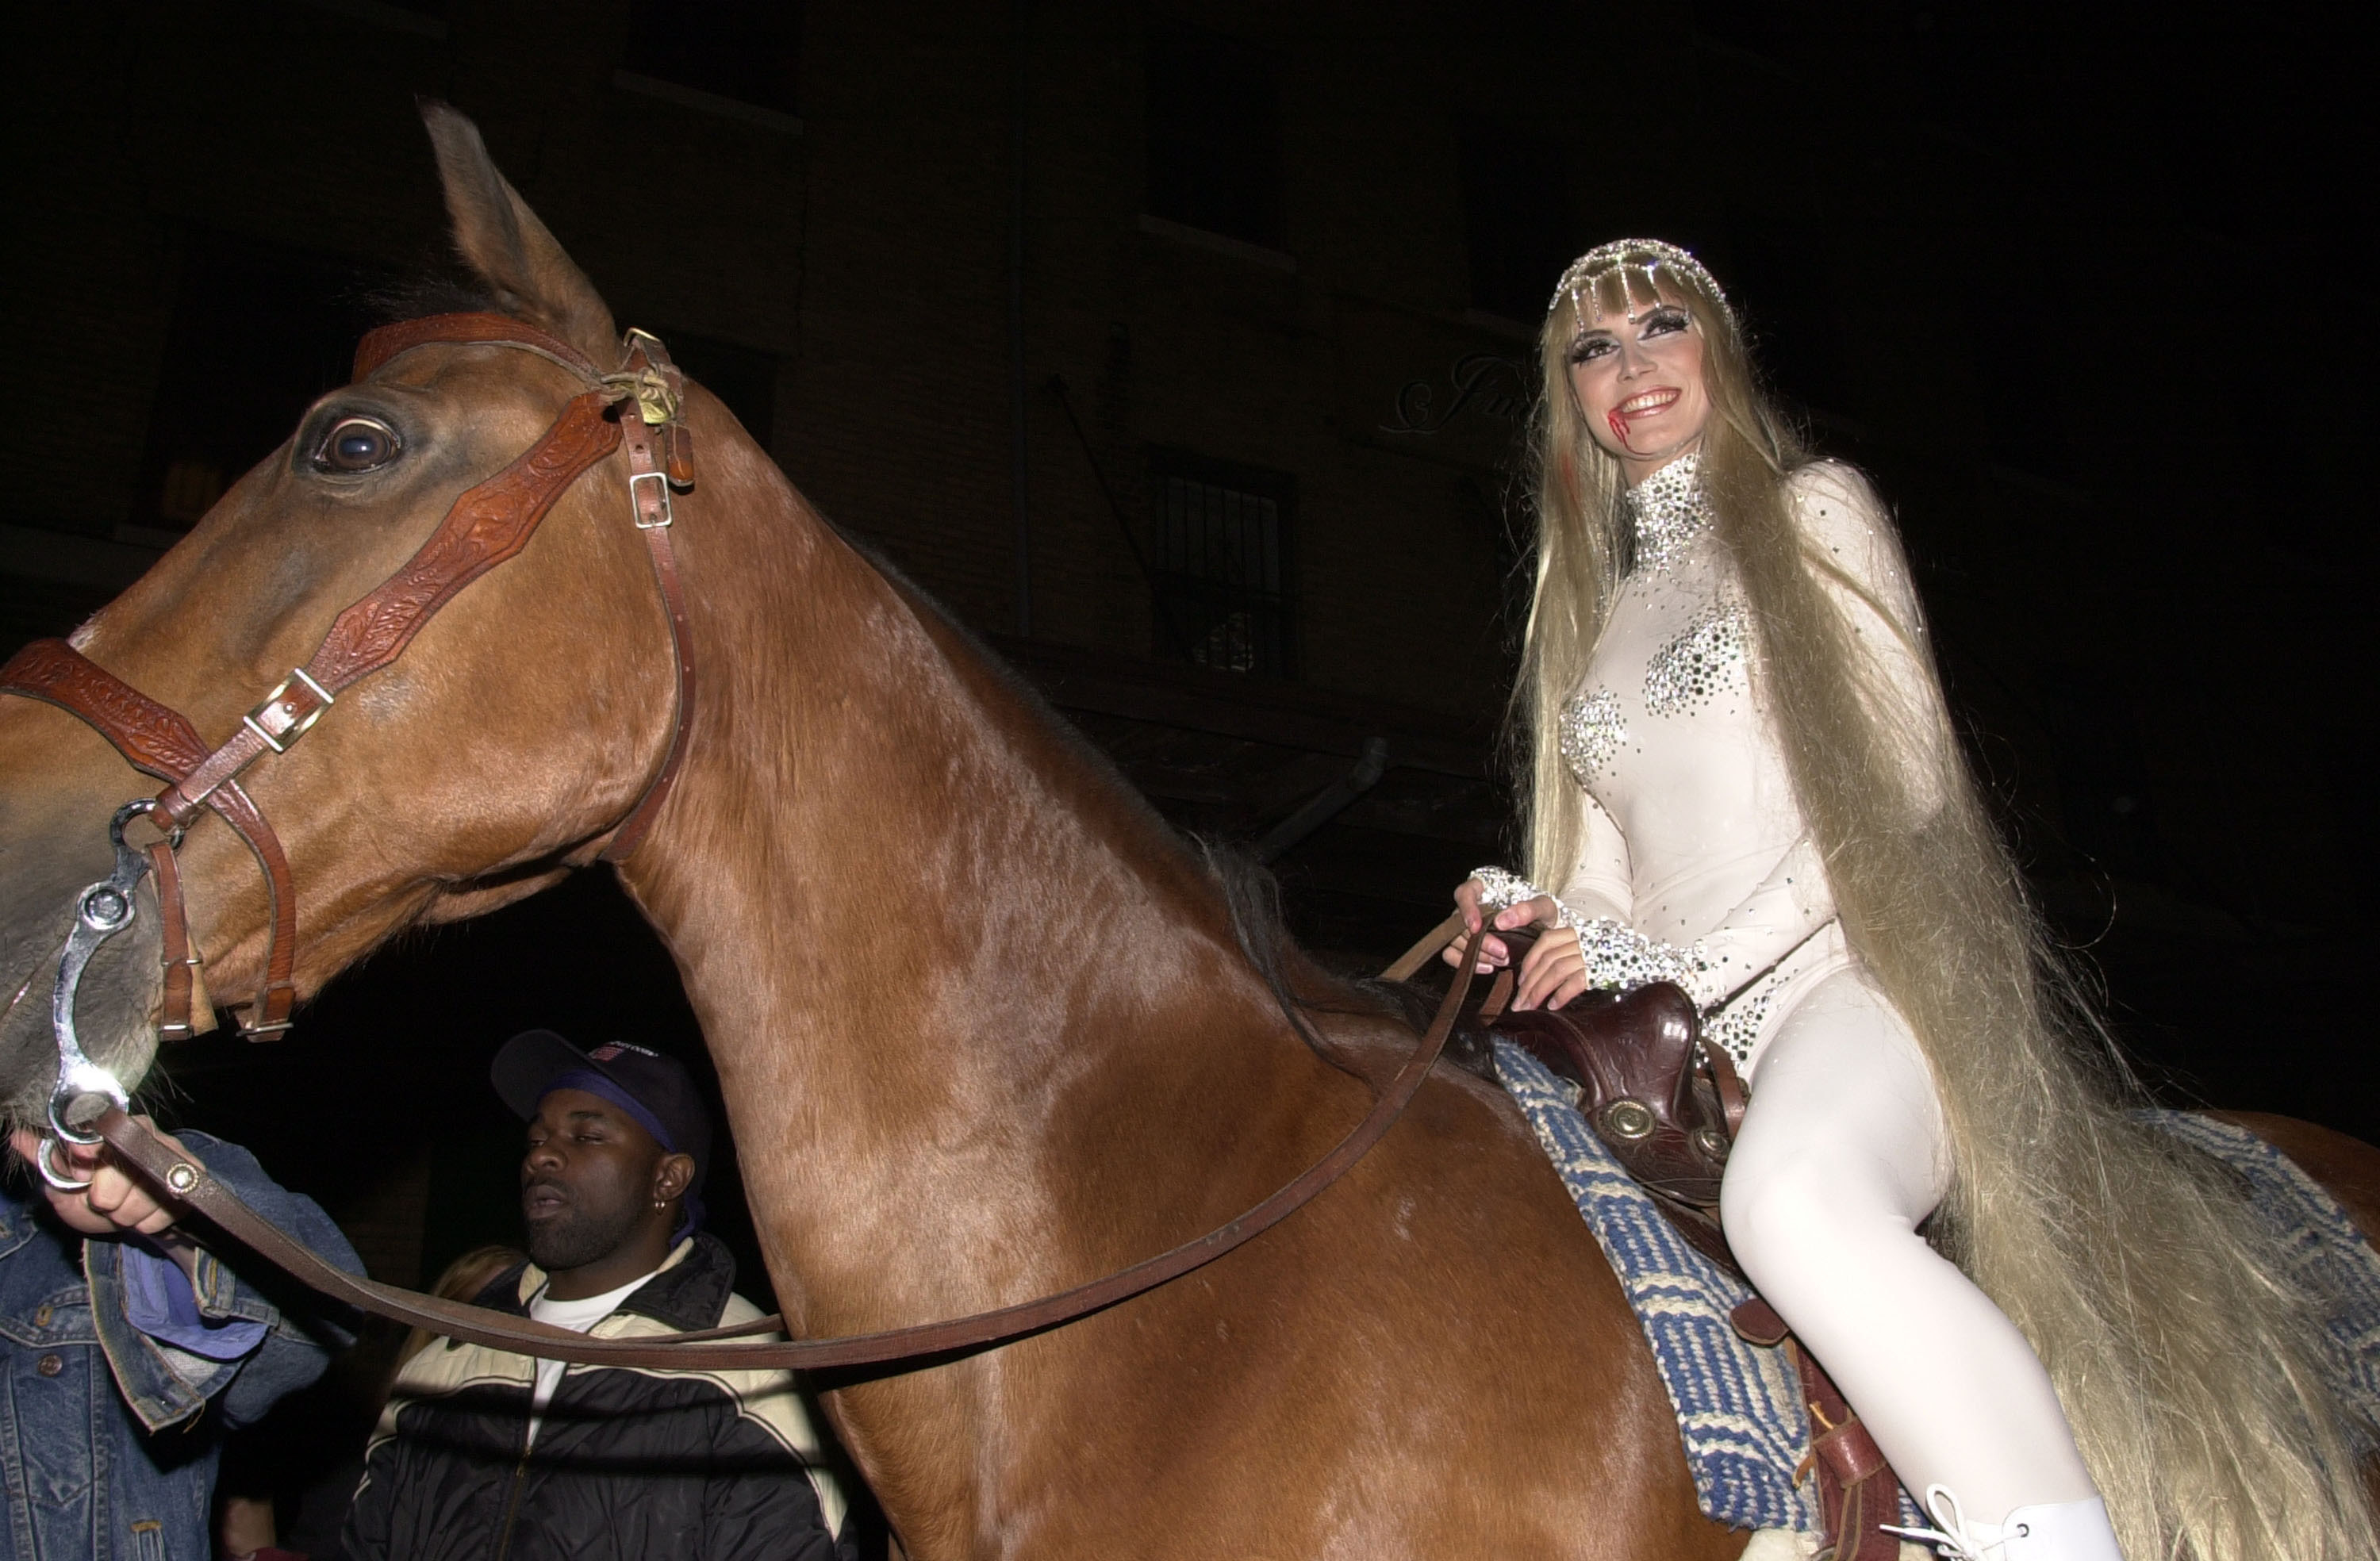 Heidi Klum in a bodysuit on a horse. Horse looks scared!